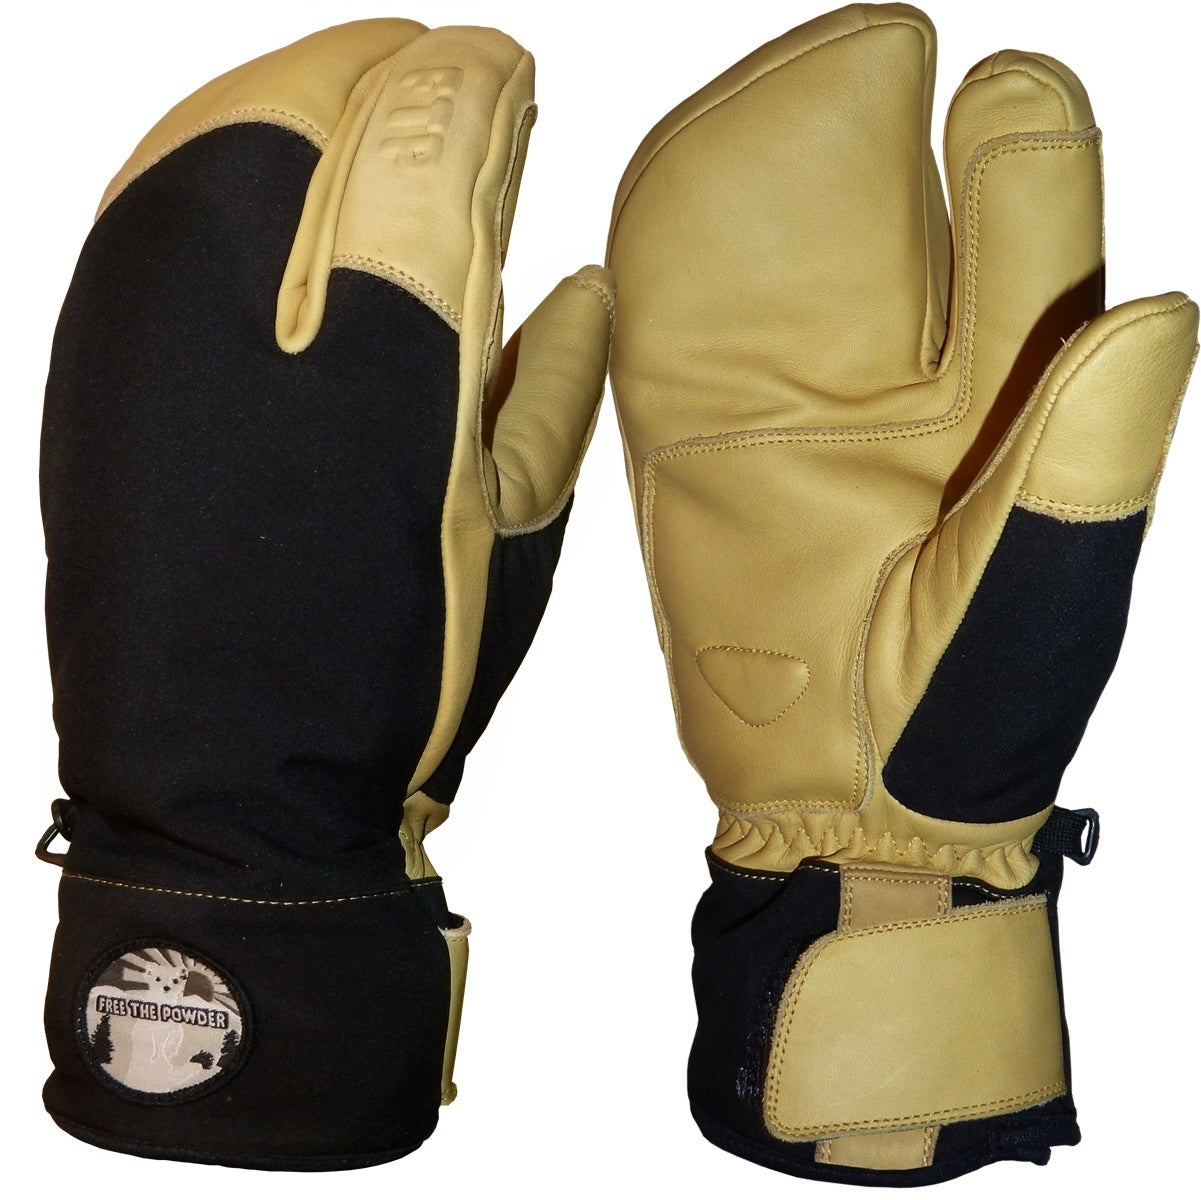 SX3 three fingered short cuff glove factory second